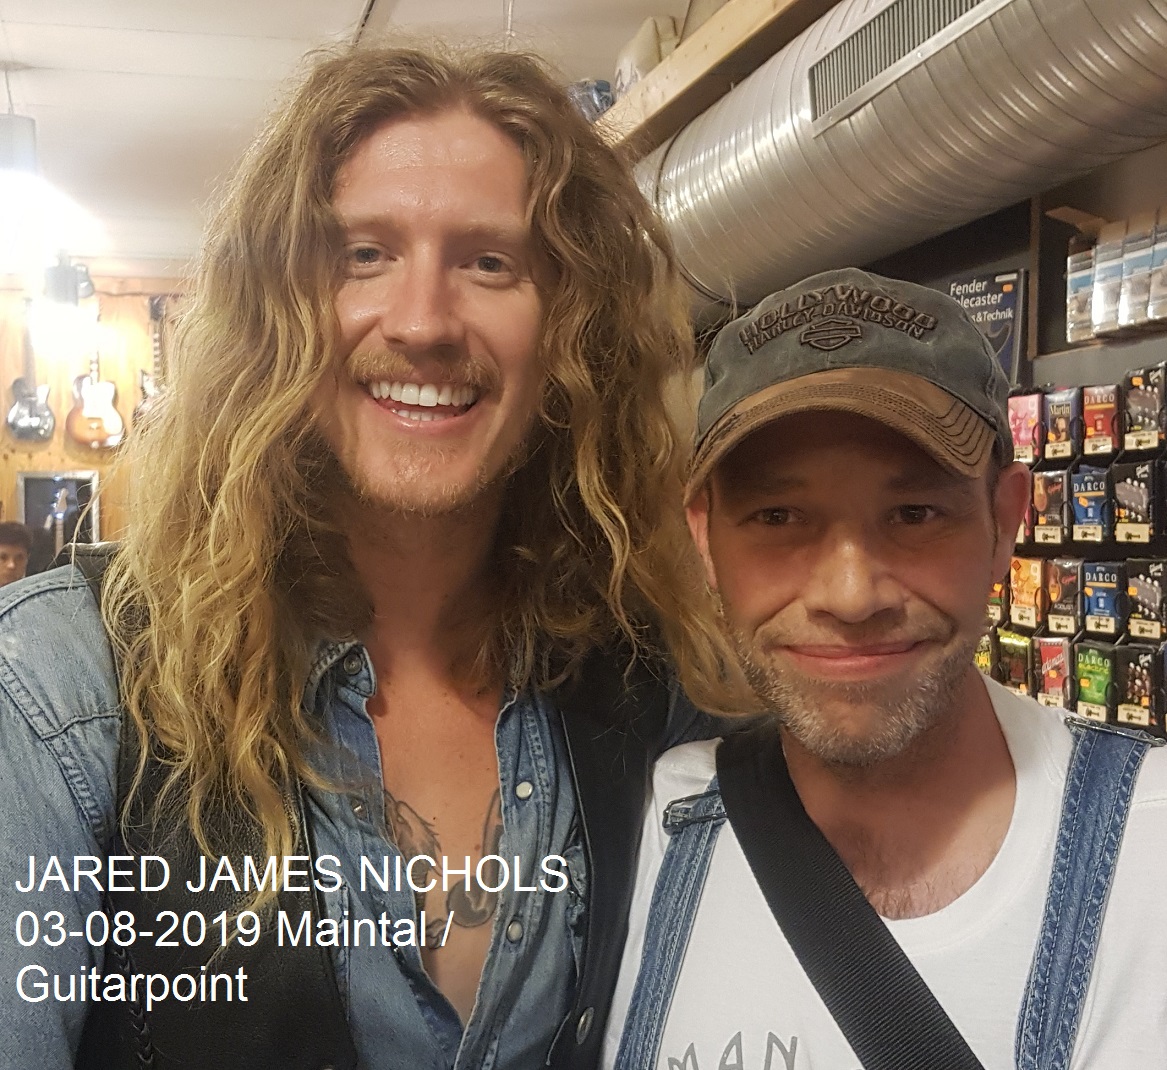 JARED JAMES NICHOLS 03-08-2019, Guitarpoint, Maintal (FFM)